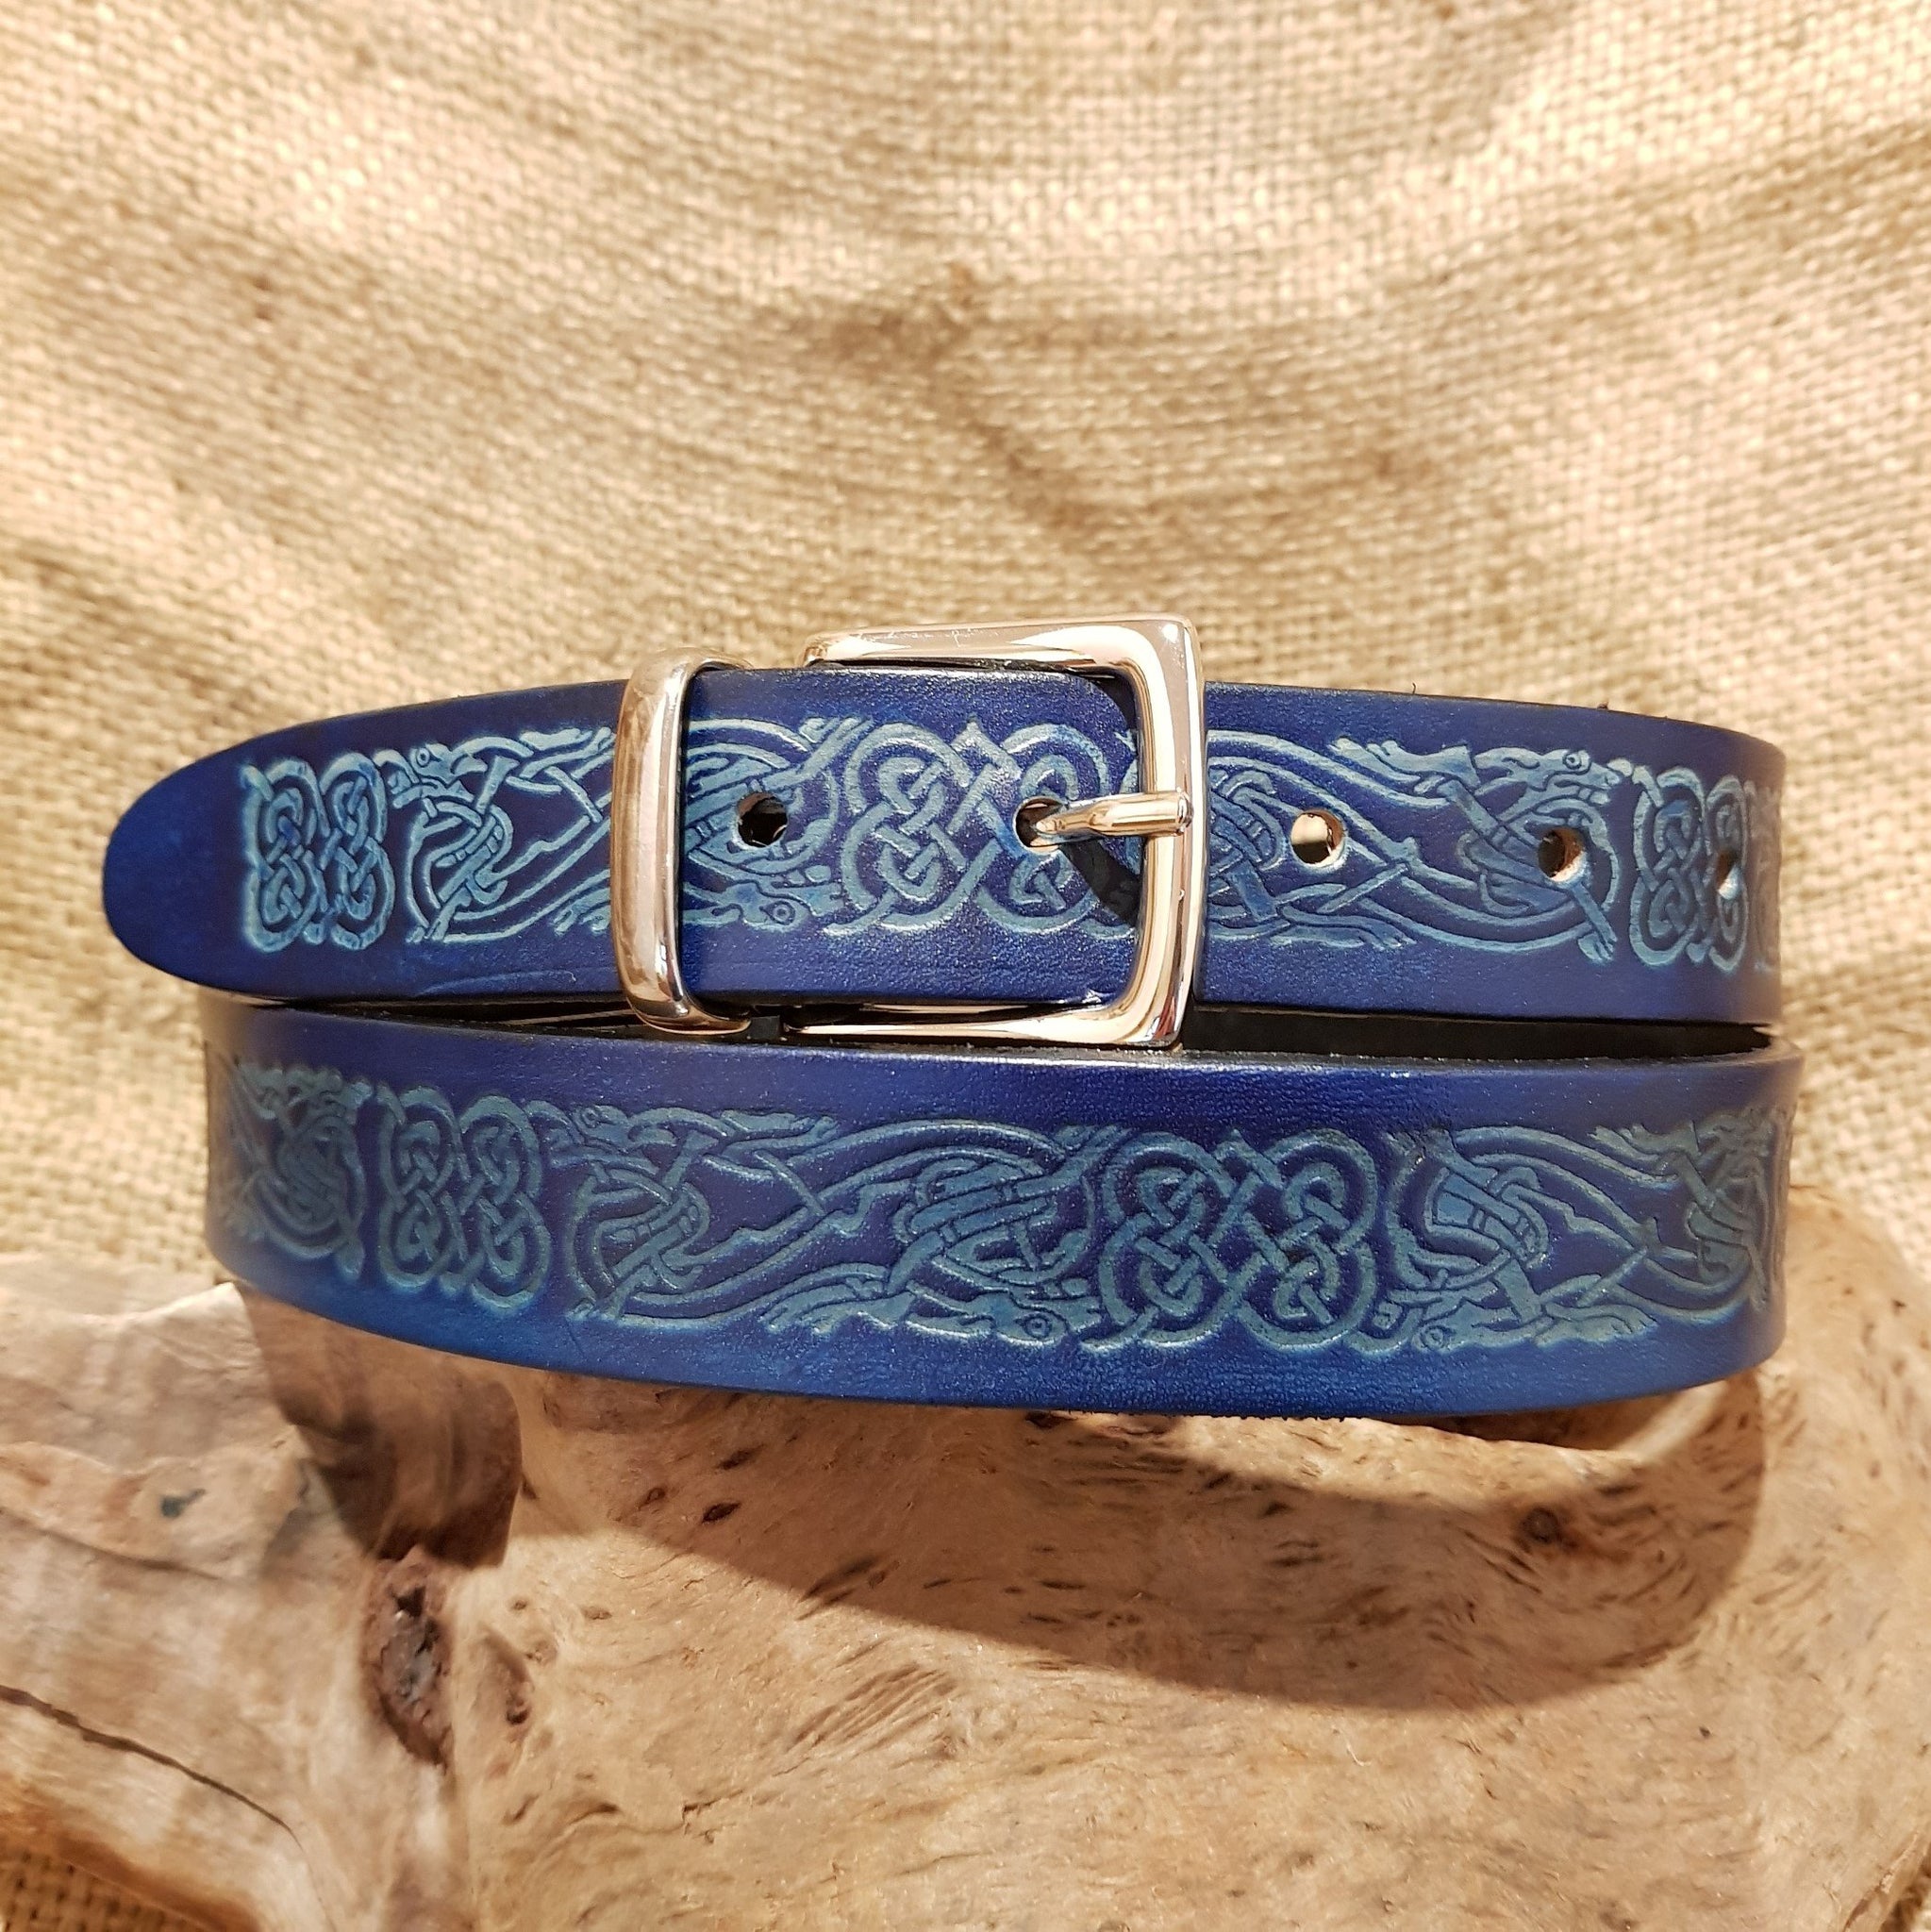 Narrow blue leather belt dragon celtic